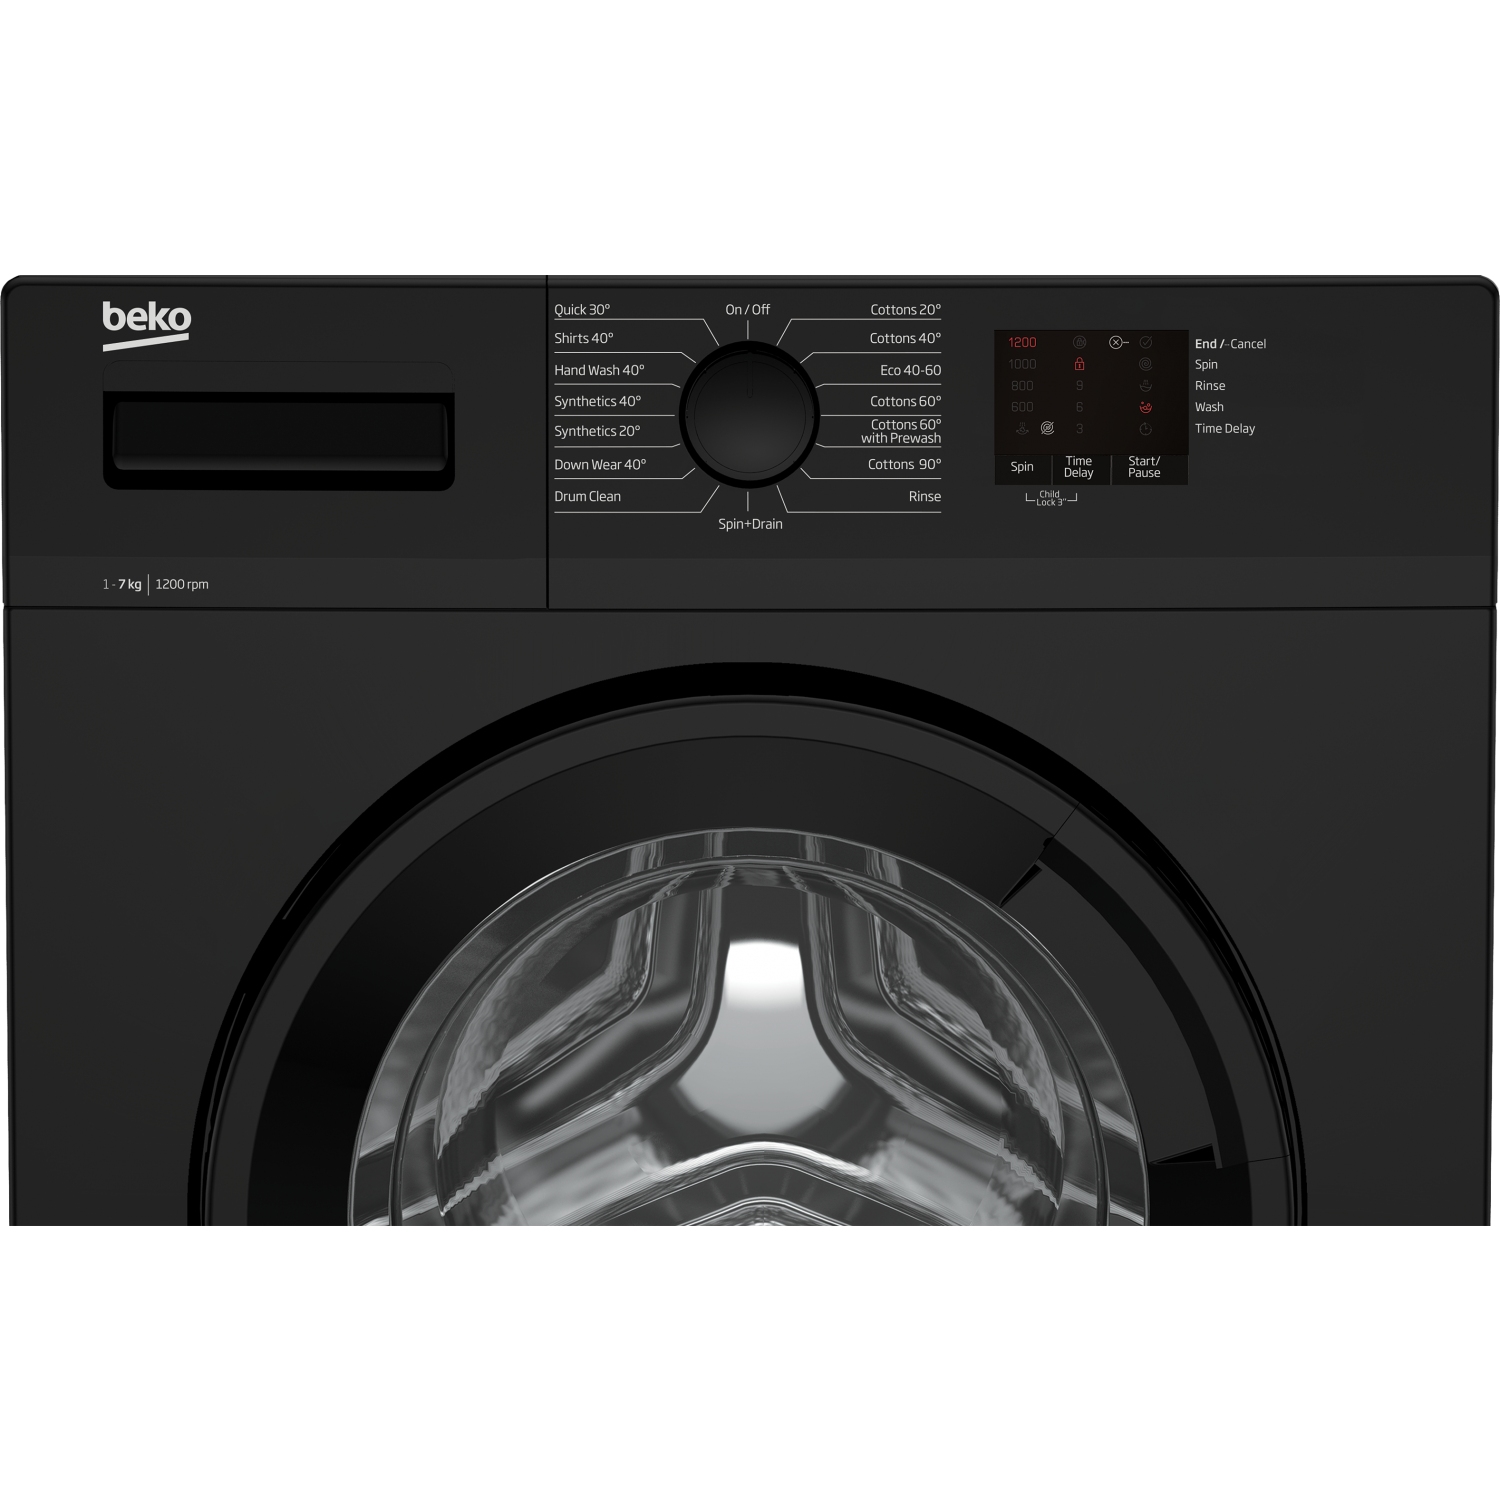 Beko WTK72042B 7kg 1200 Spin Washing Machine with Quick Programme - Black - 1